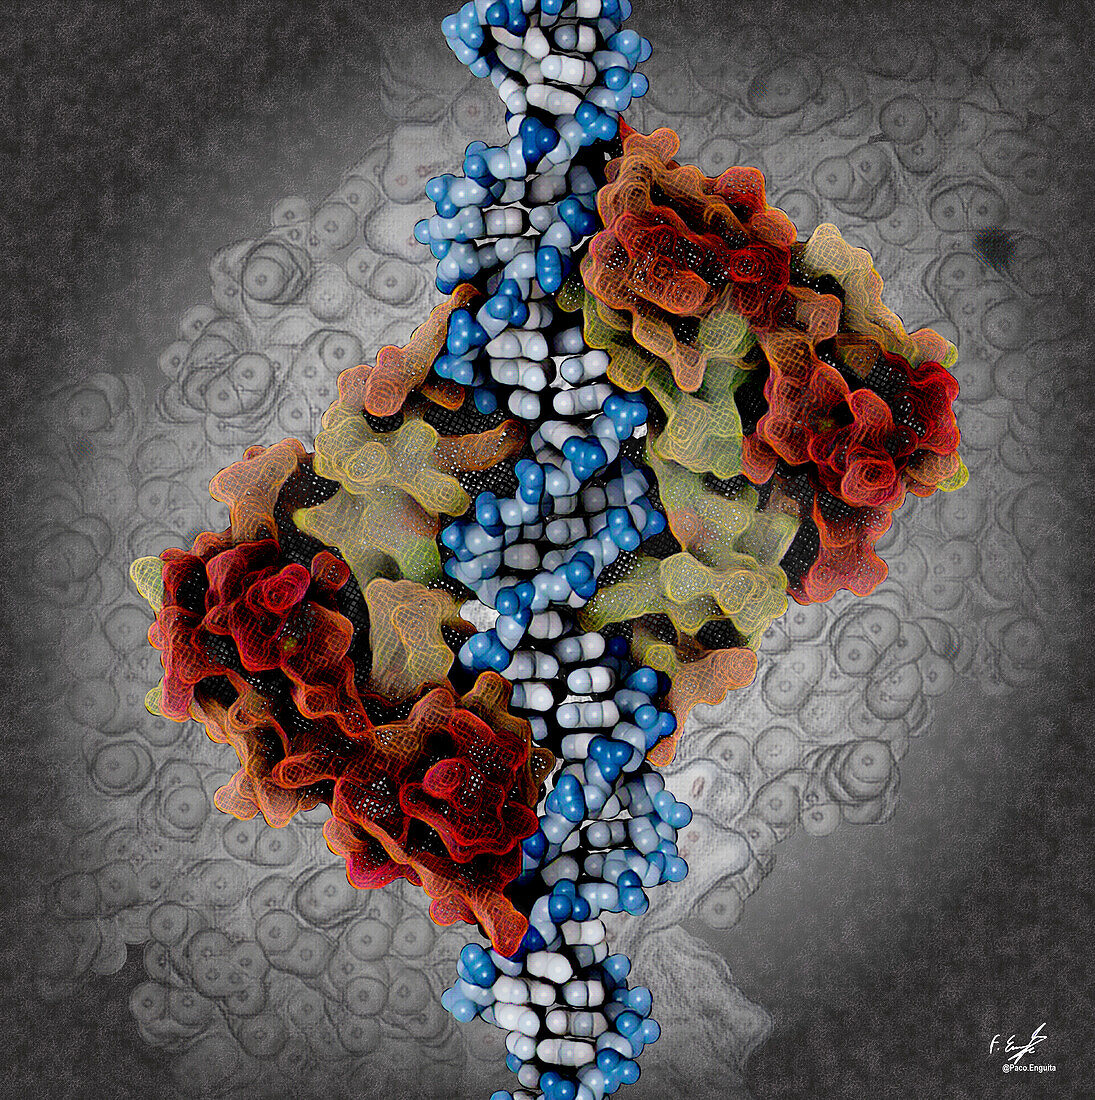 Zinc uptake regulator and DNA, illustration